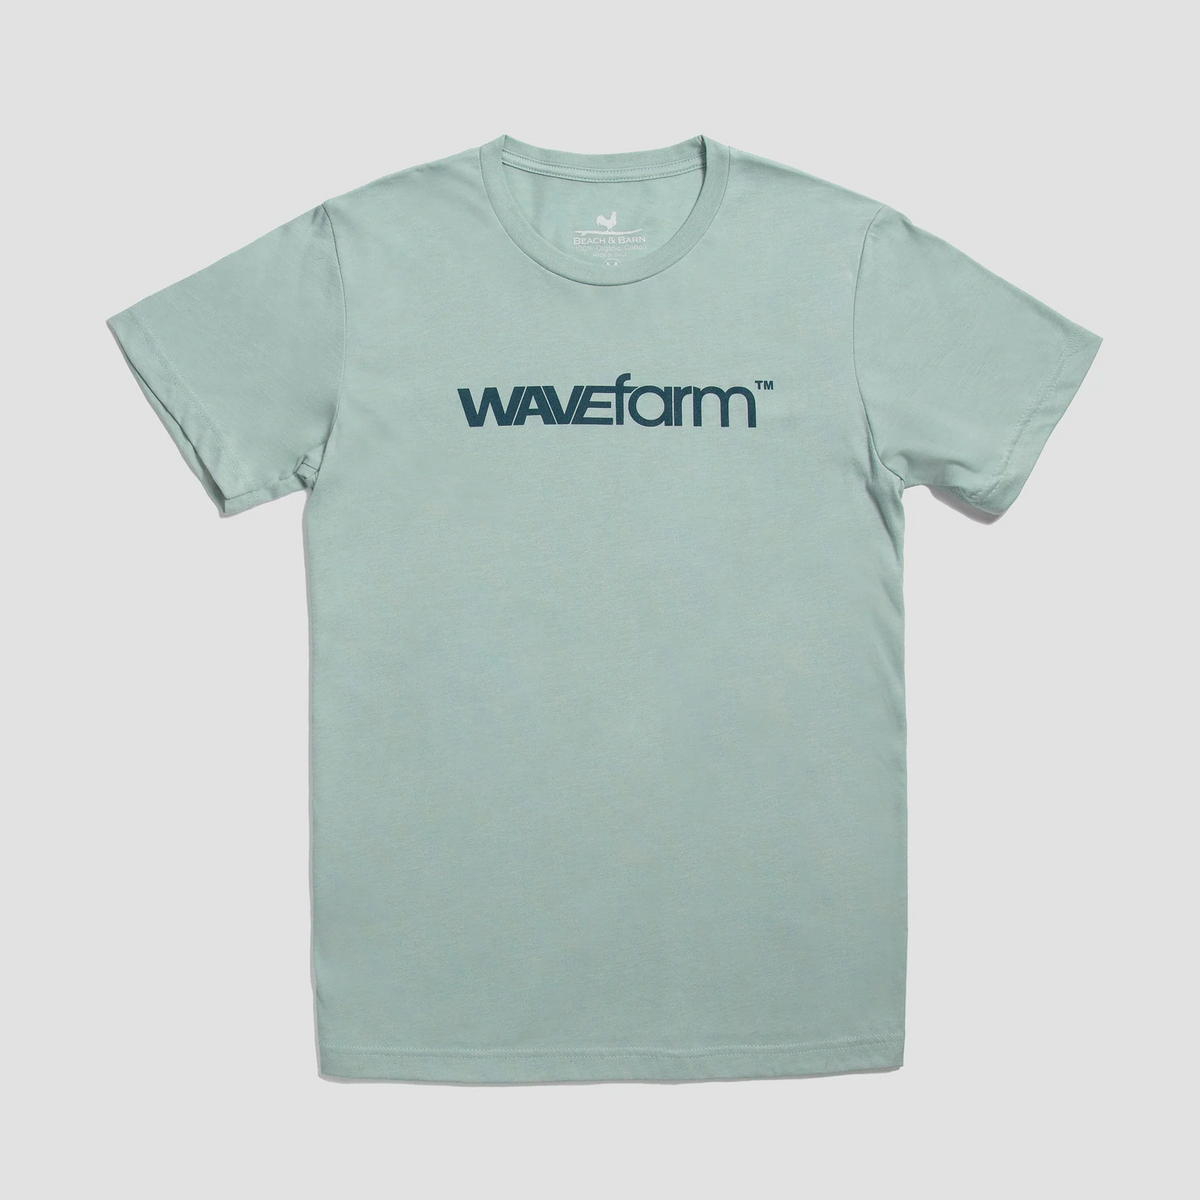 Sale - WaveFarm Text Tee Shirt